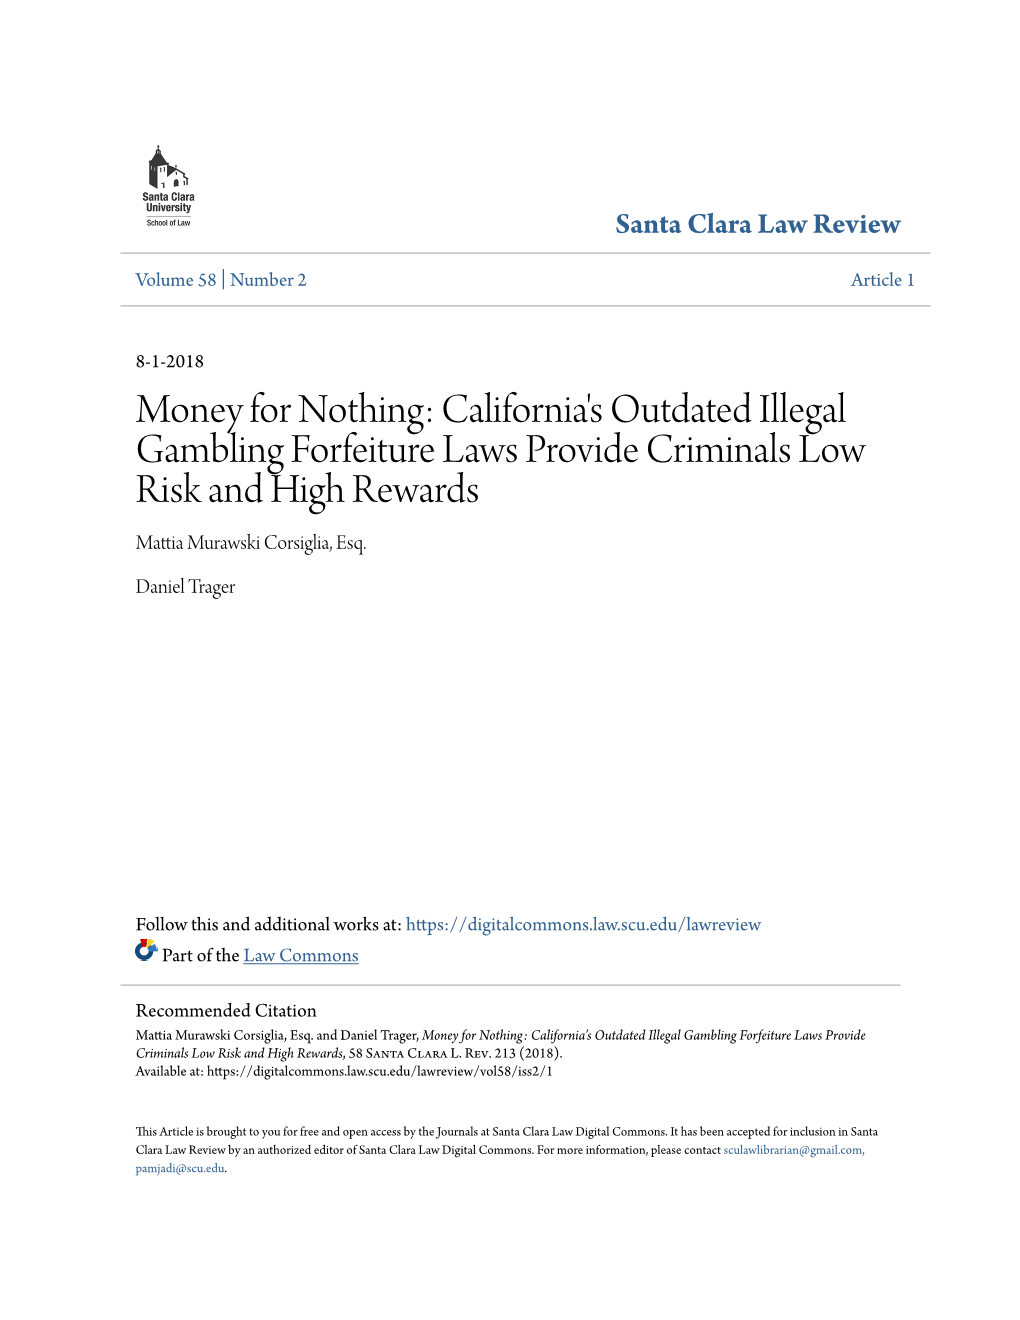 California's Outdated Illegal Gambling Forfeiture Laws Provide Criminals Low Risk and High Rewards Mattia Murawski Corsiglia, Esq